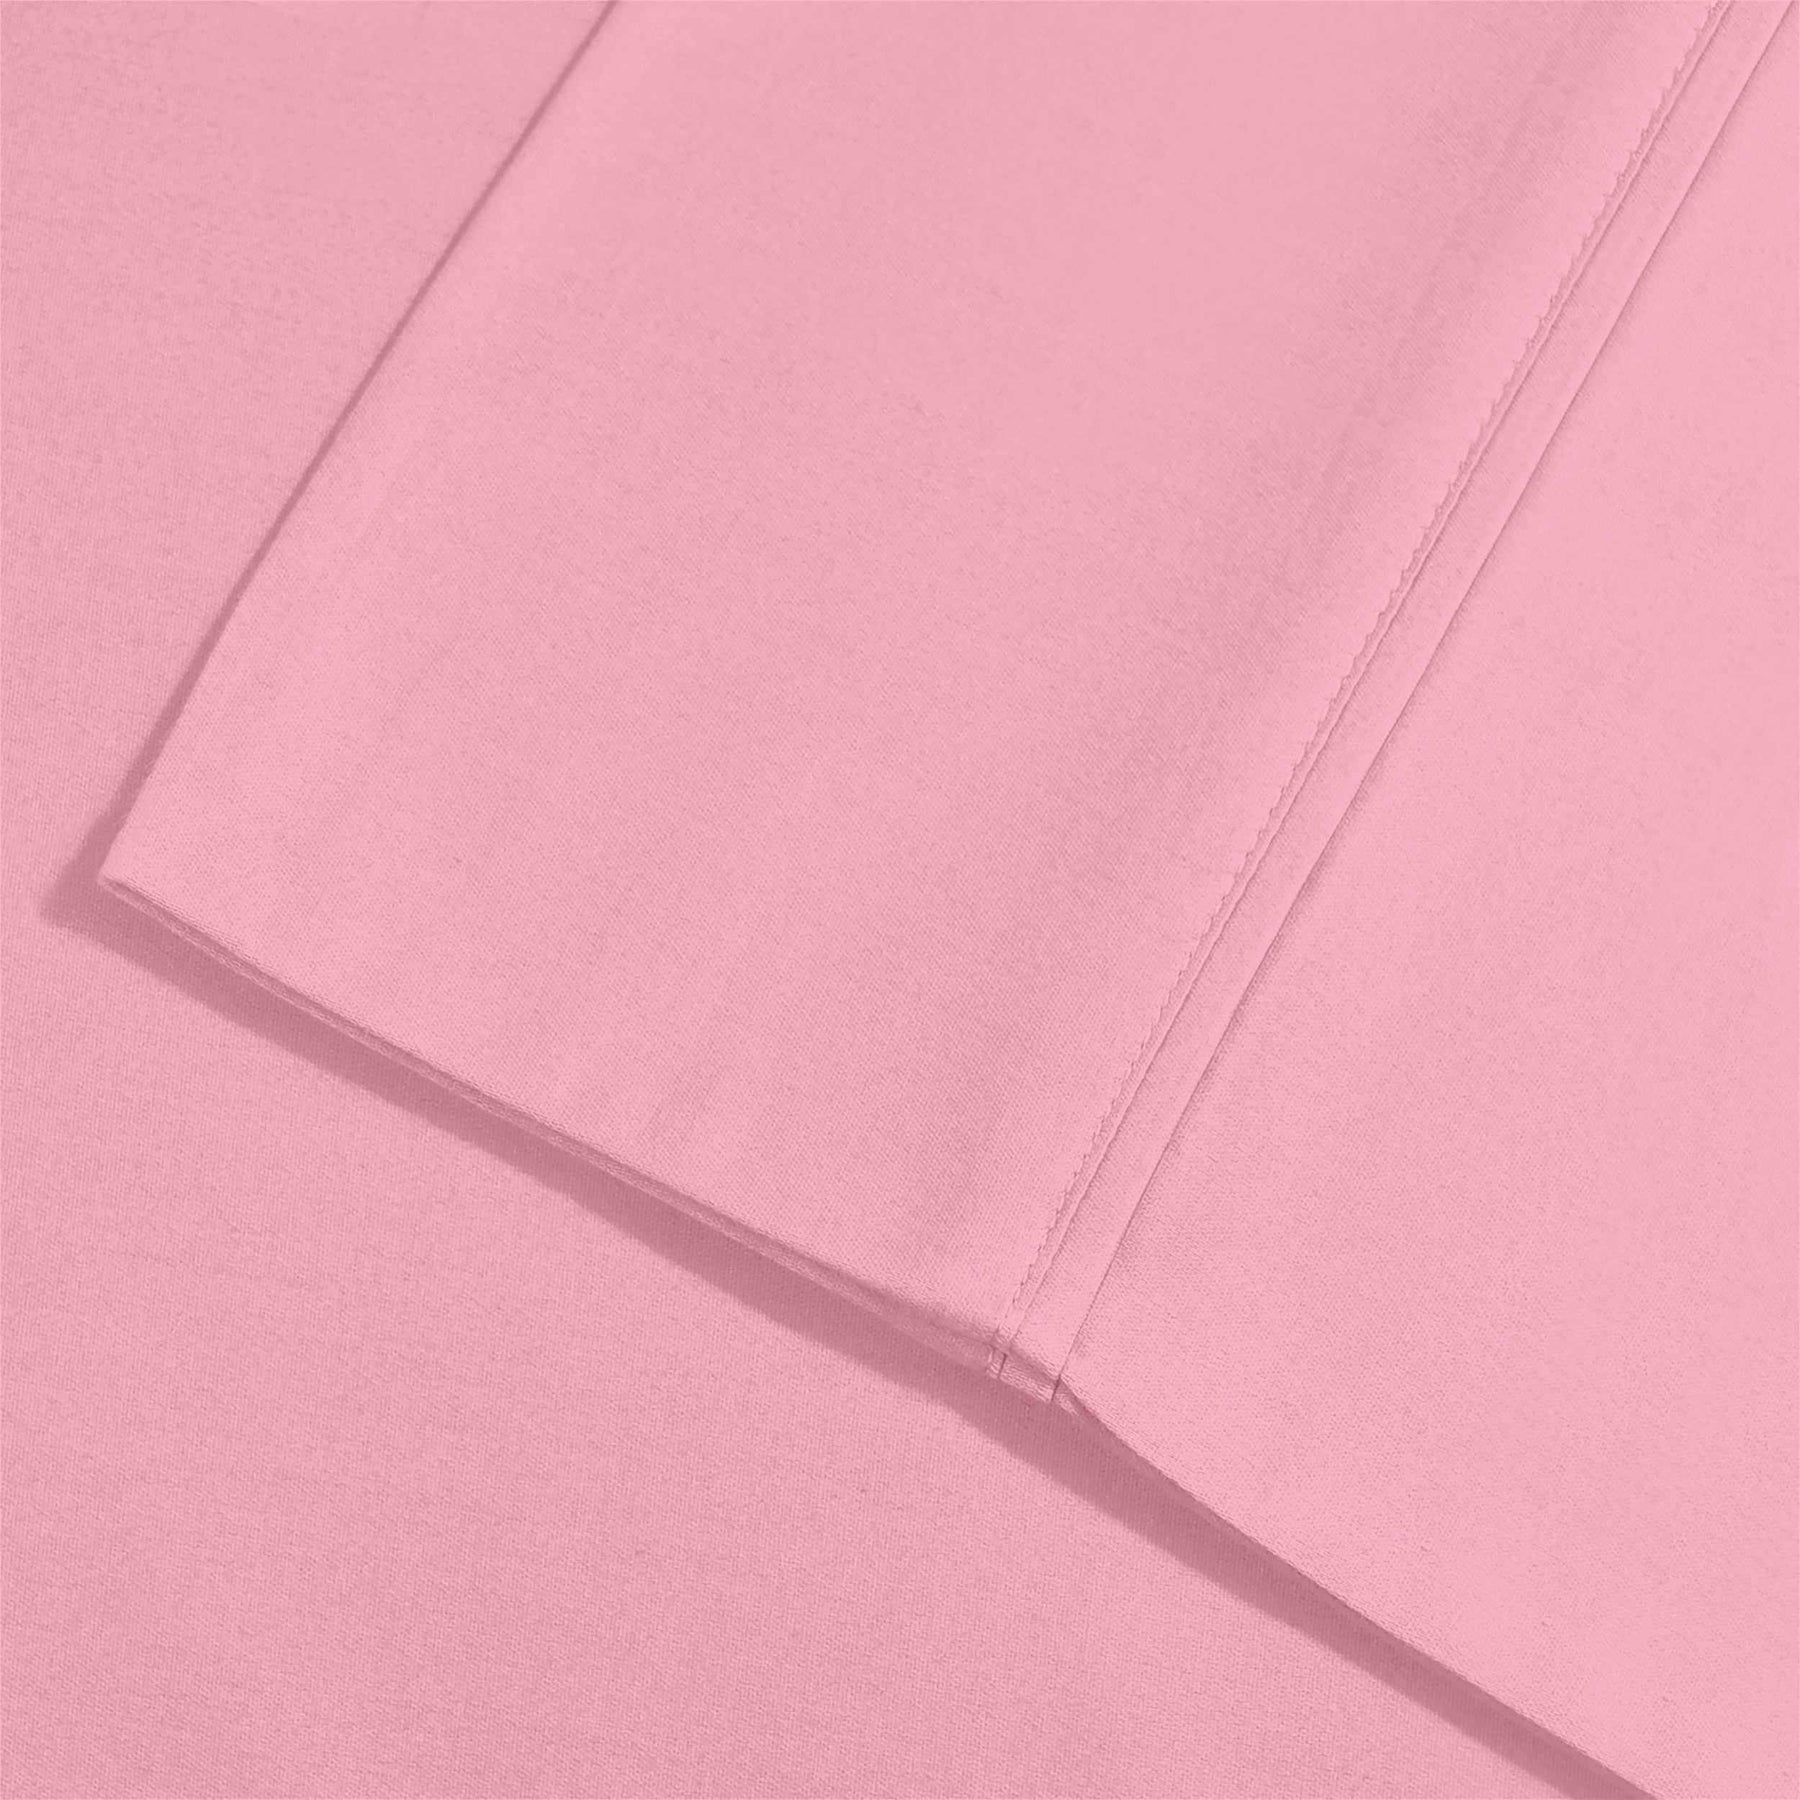 Superior 2 Piece Microfiber Wrinkle Resistant Solid Pillowcase Set - Pink